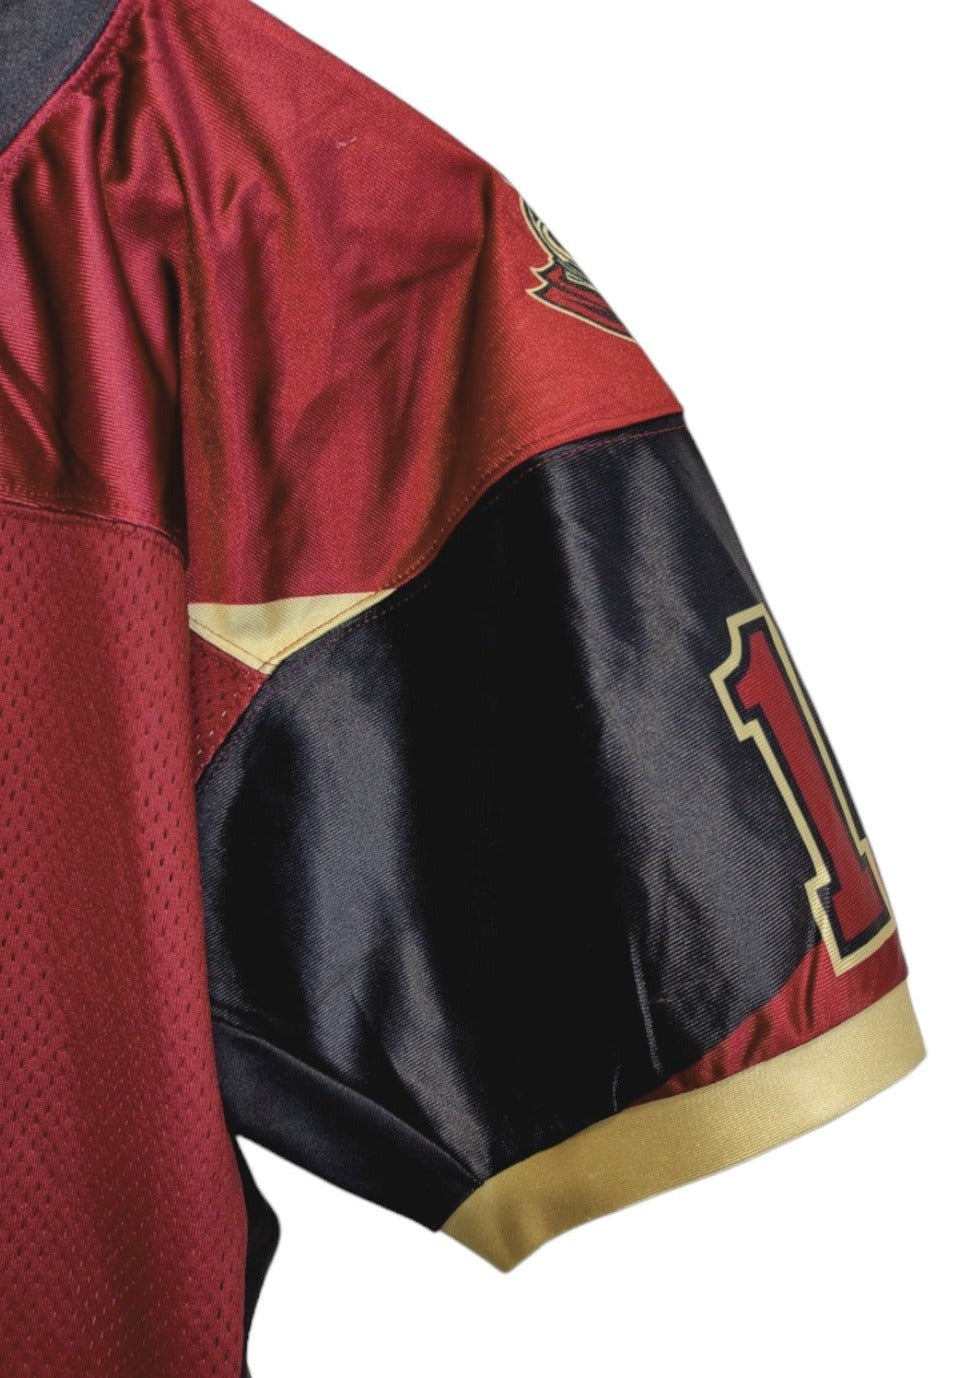 Vintage, American Football Jersey FITUSA σε Μπορντό Χρώμα (Medium)